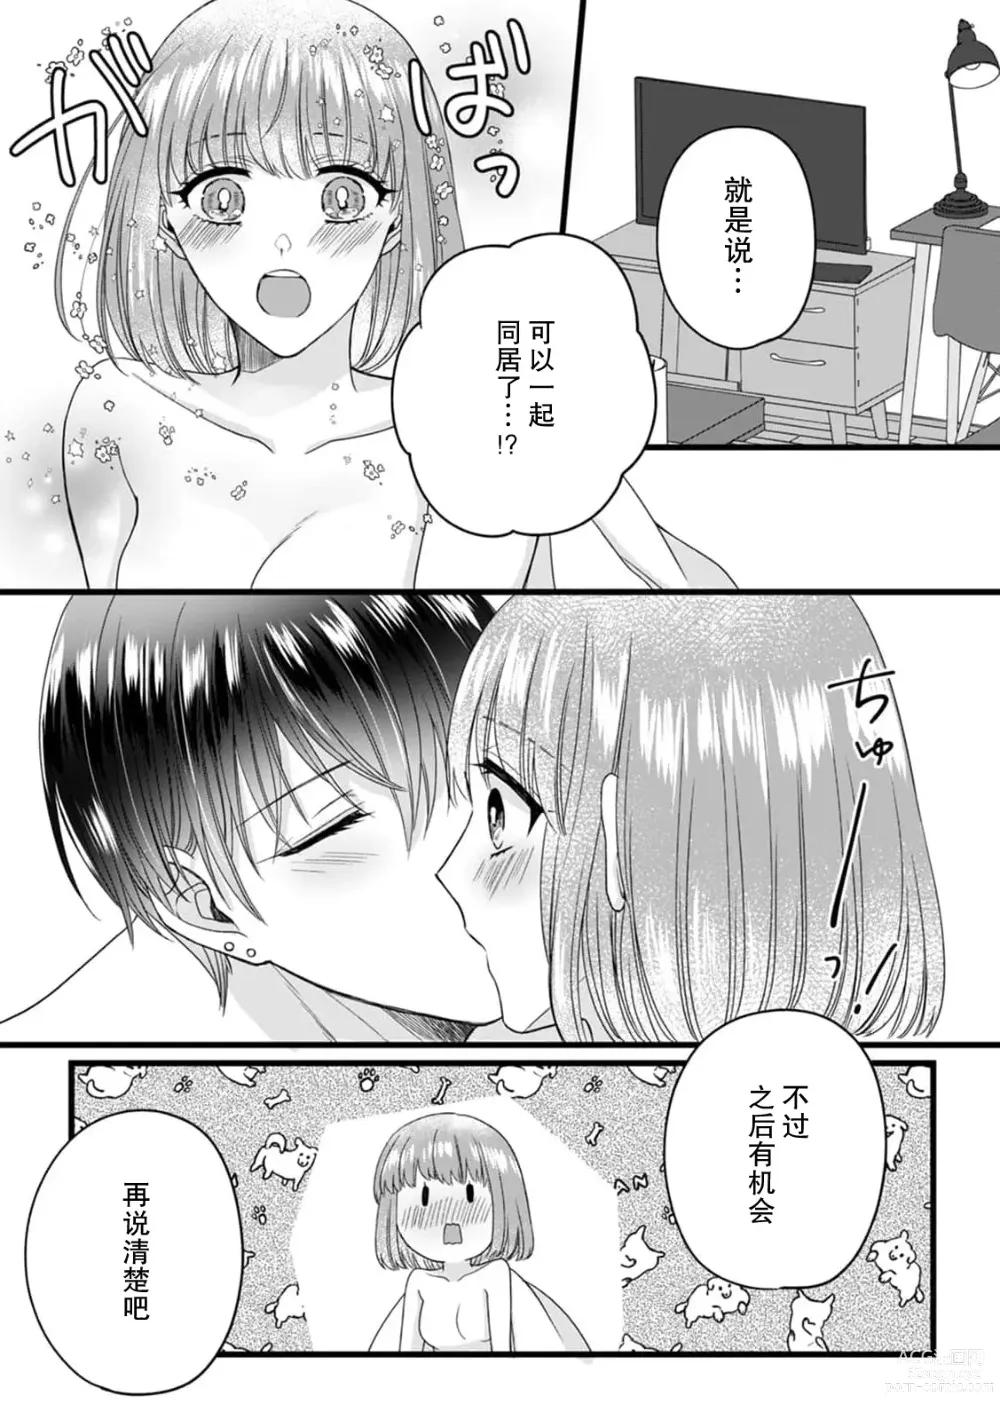 Page 127 of manga 弄湿我的是青梅竹马的男大姐 第一次见到……他认真的雄性一面。 1-5 end